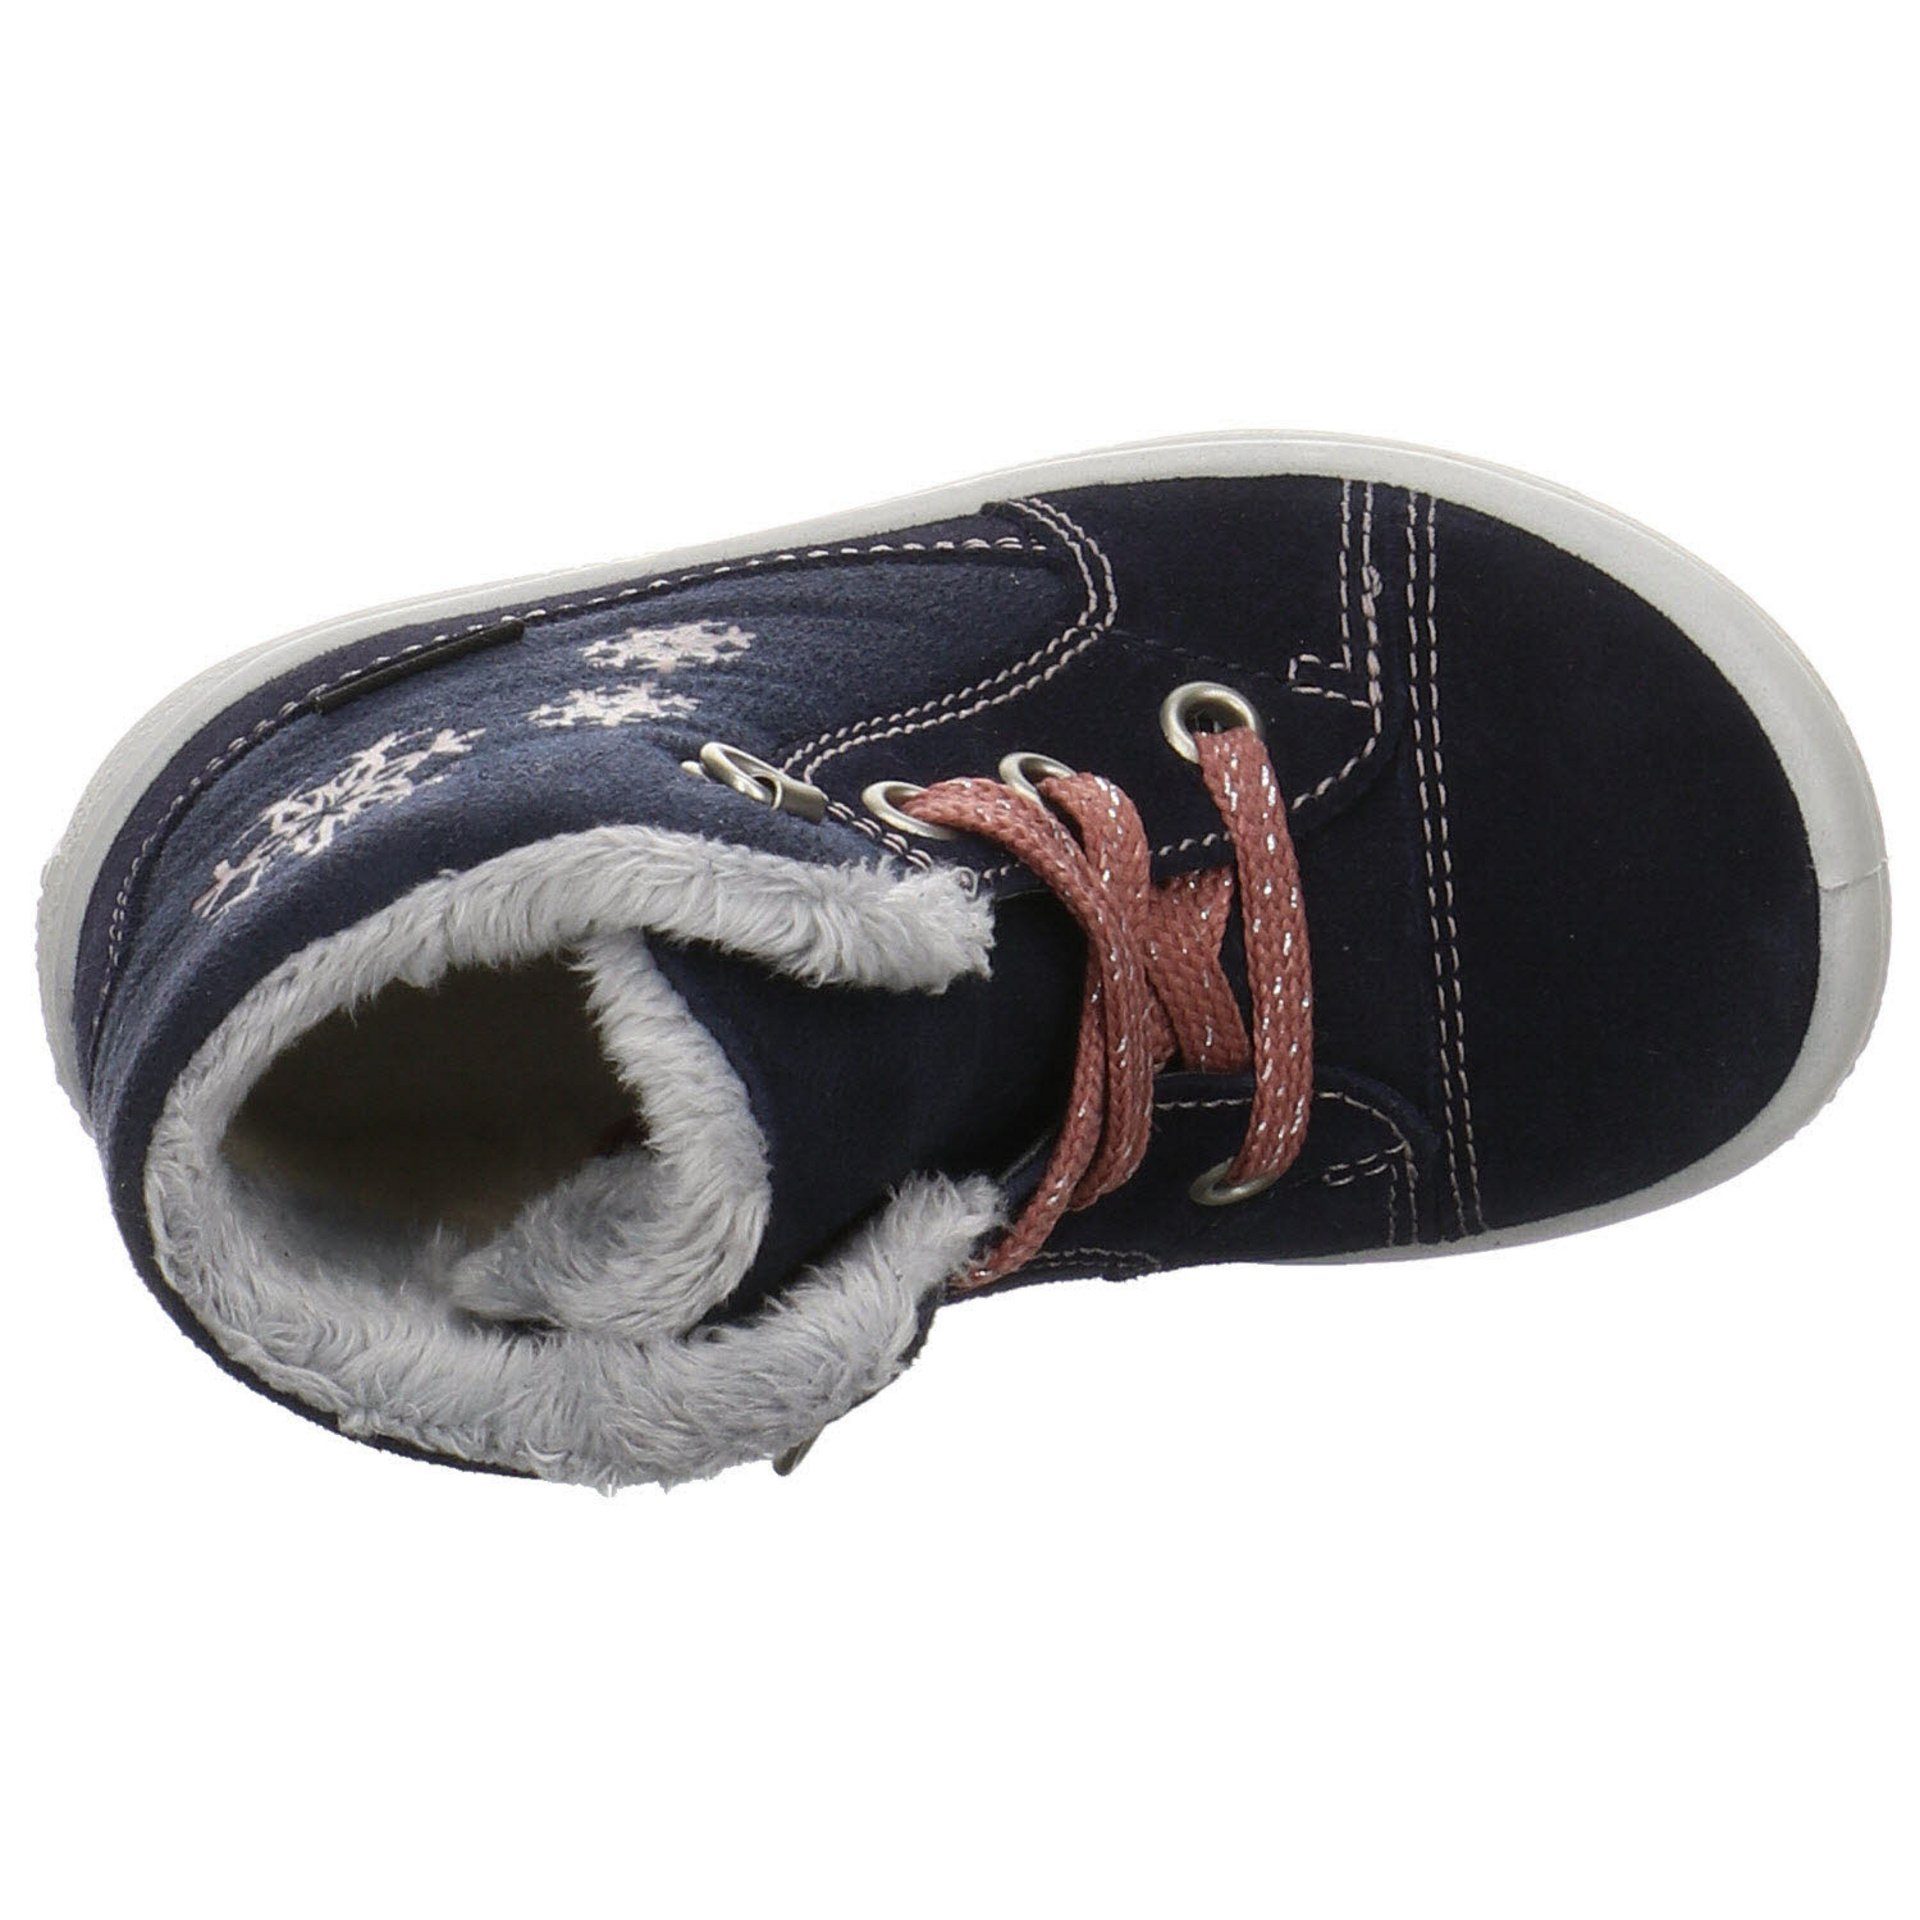 Lauflernschuhe Lauflernschuh Leder-/Textilkombination Baby Superfit Boots Krabbelschuhe Groovy